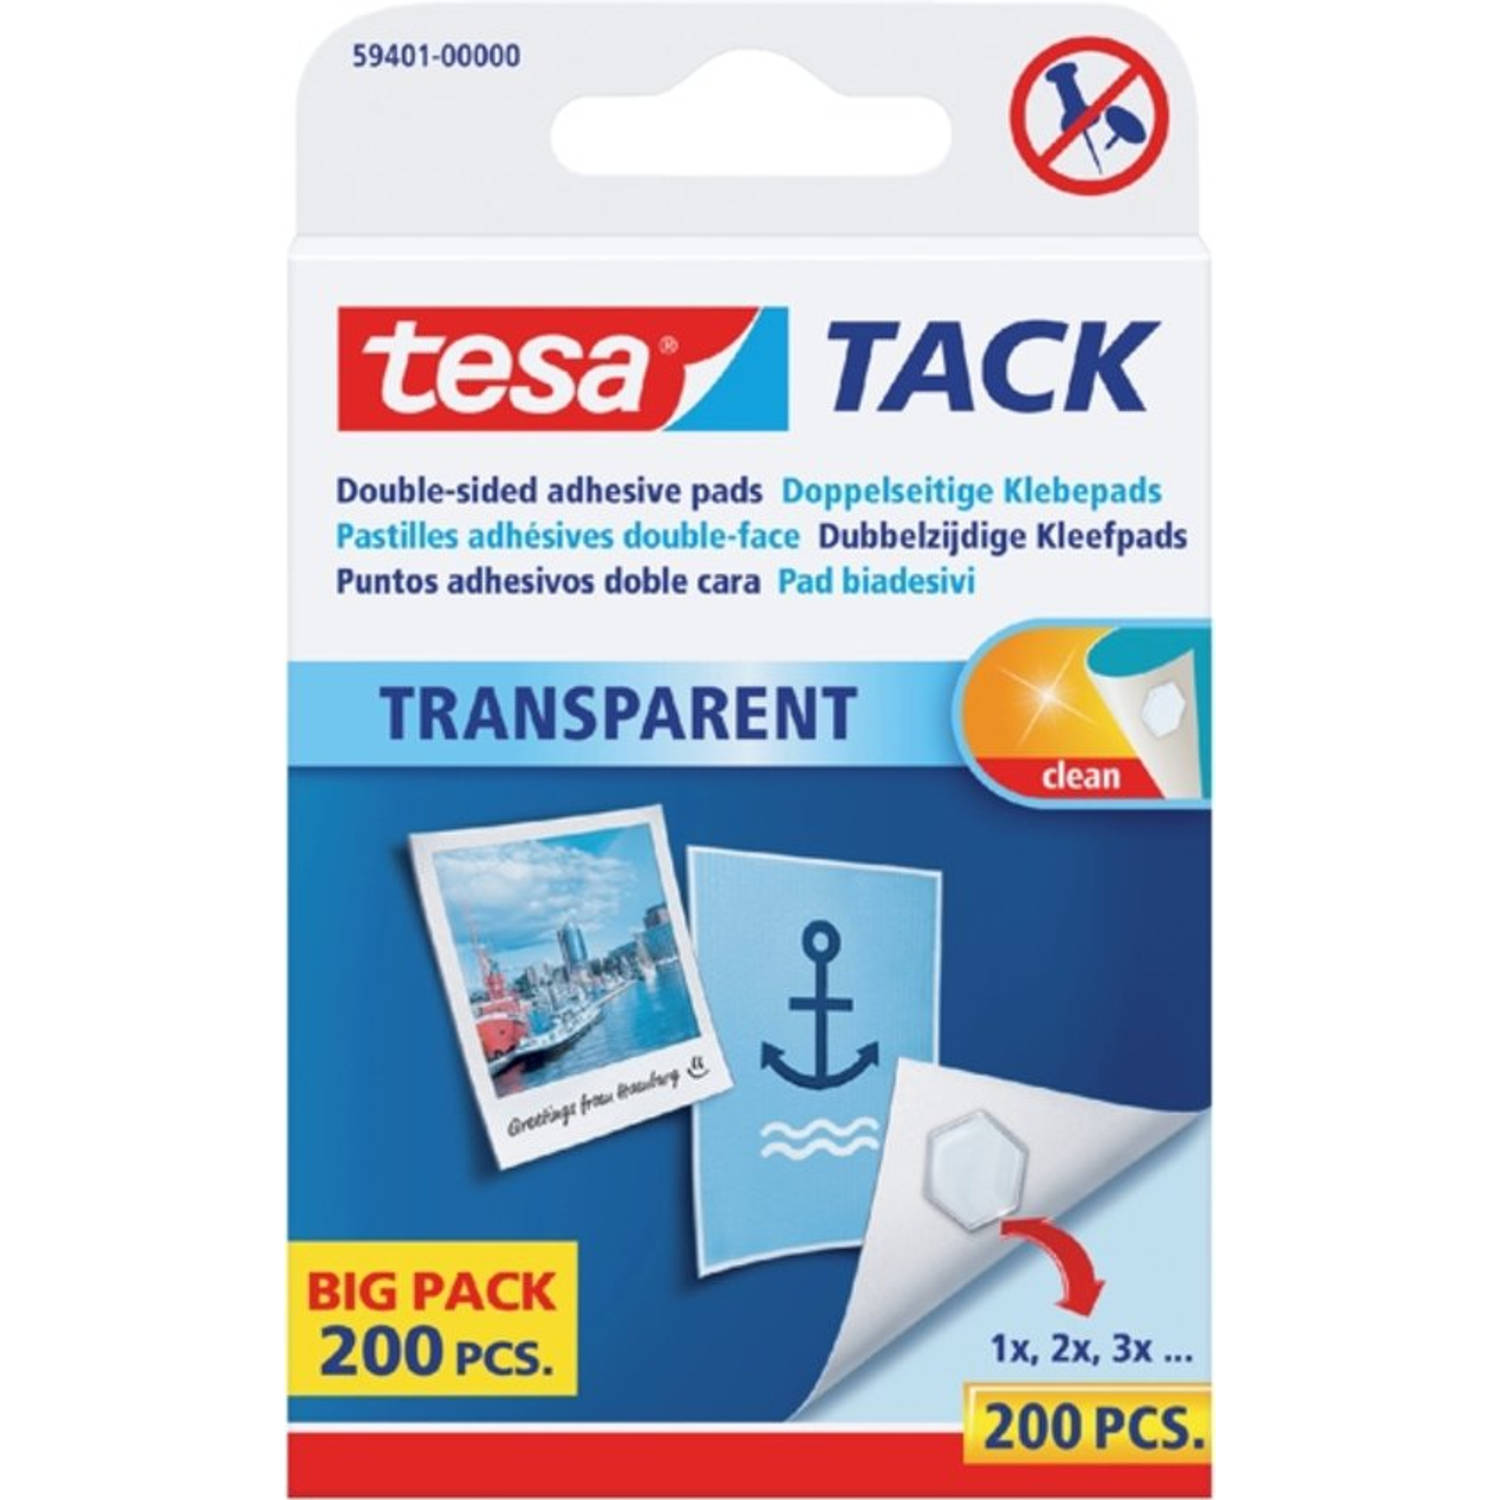 Tesa TACK Transparante dubbelzijdige kleefpads